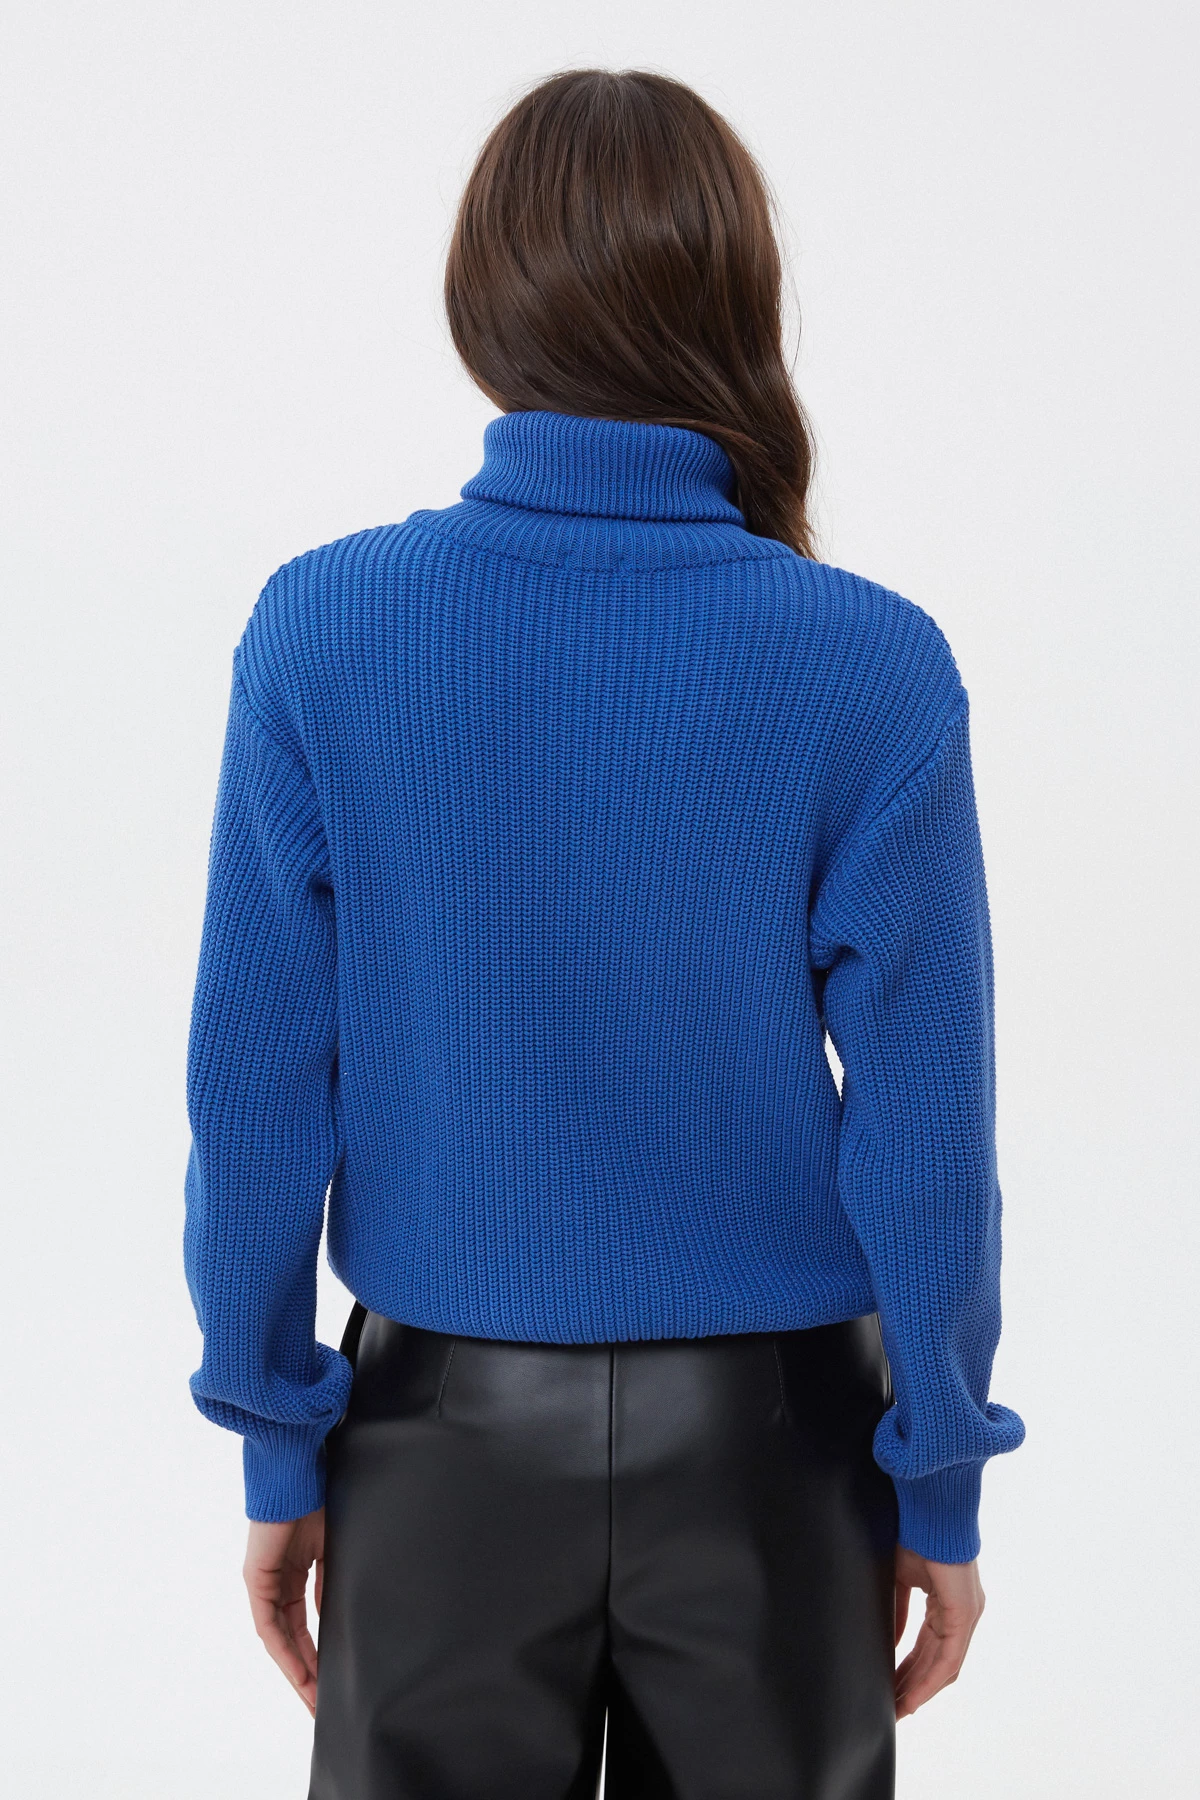 Blue cotton zip-up knit sweater, photo 6